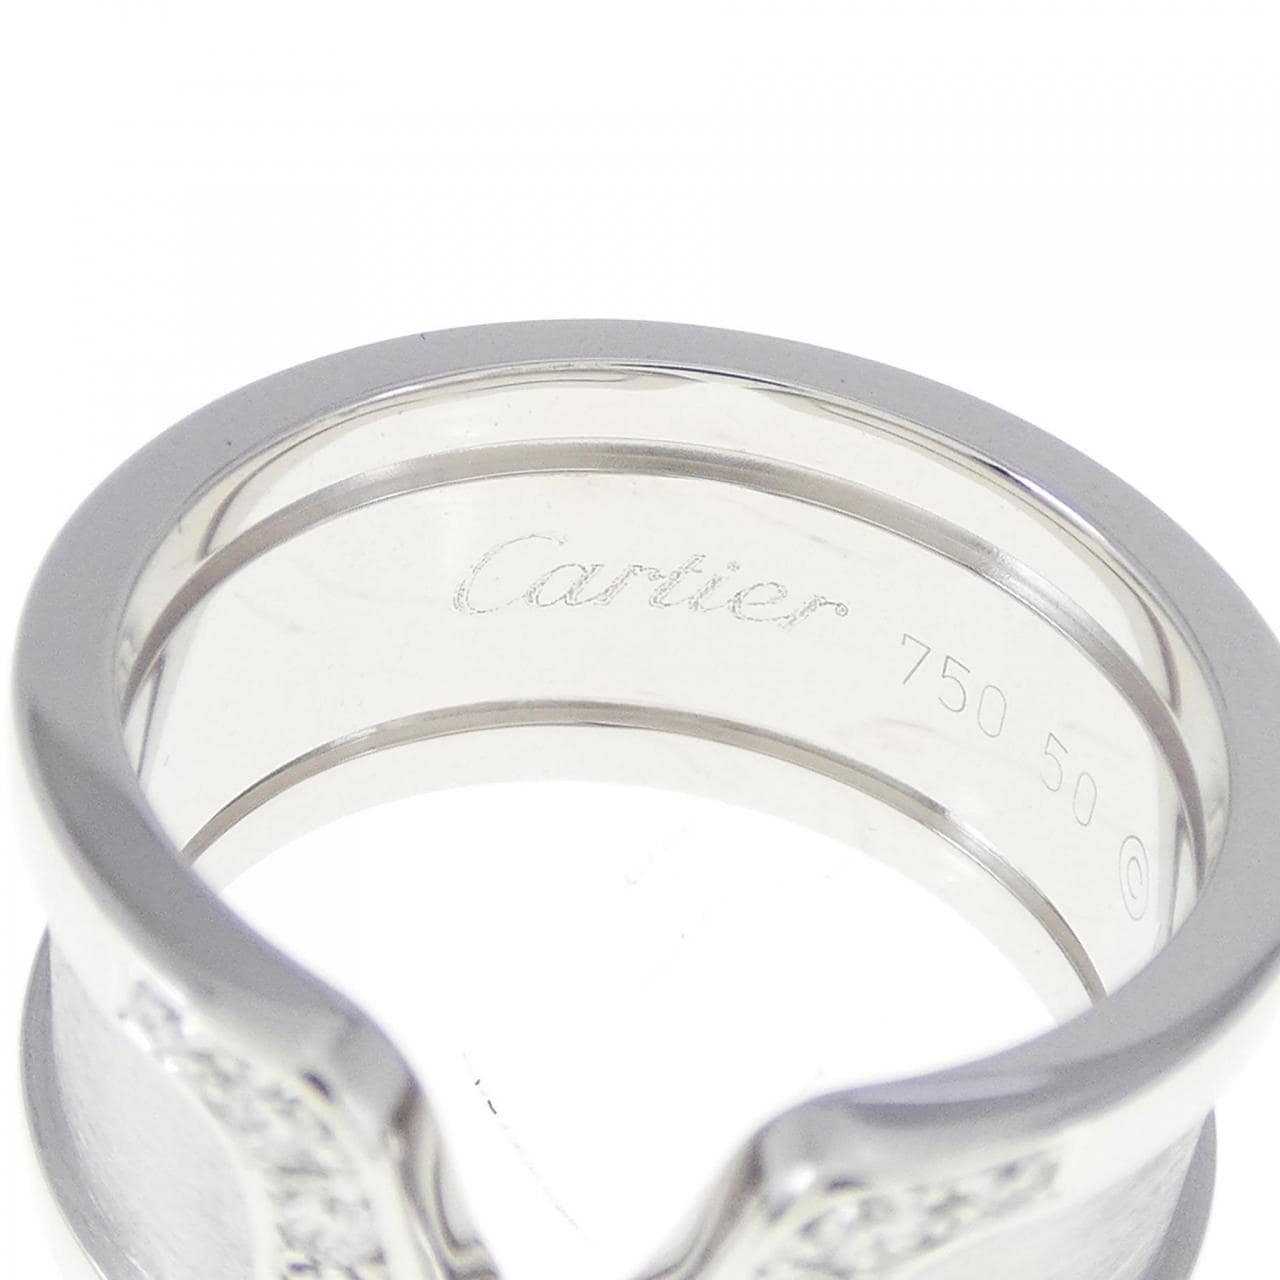 Cartier C2大號戒指